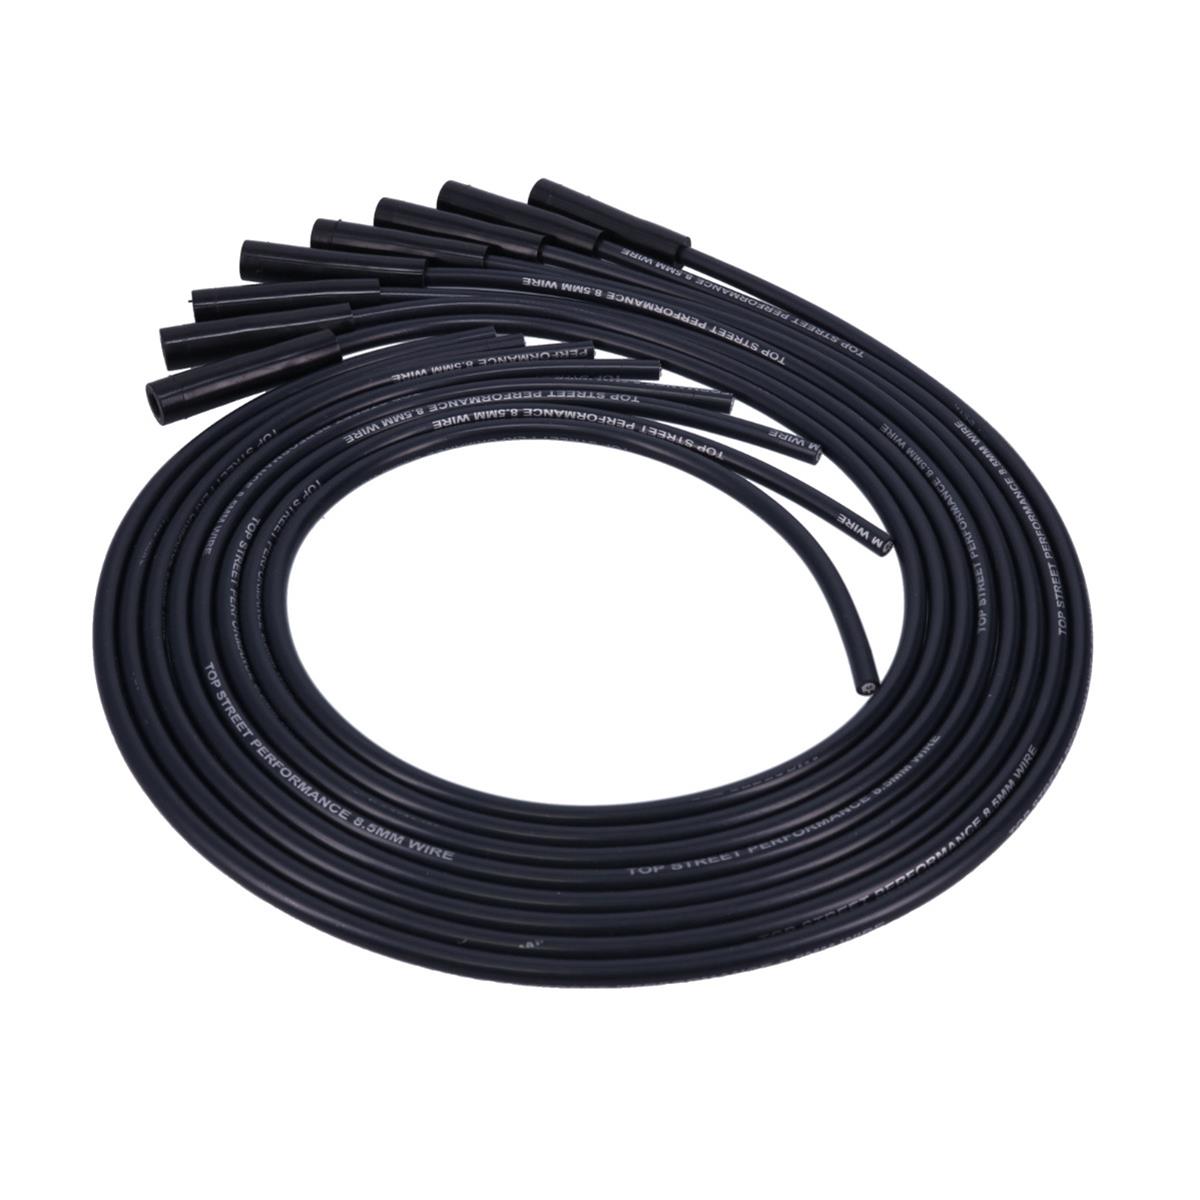 Top Street Performance 81025 8.5mm Universal LS/Lt Spark Plug Spark Plug Wire Set with 180° Plug Boots, Black